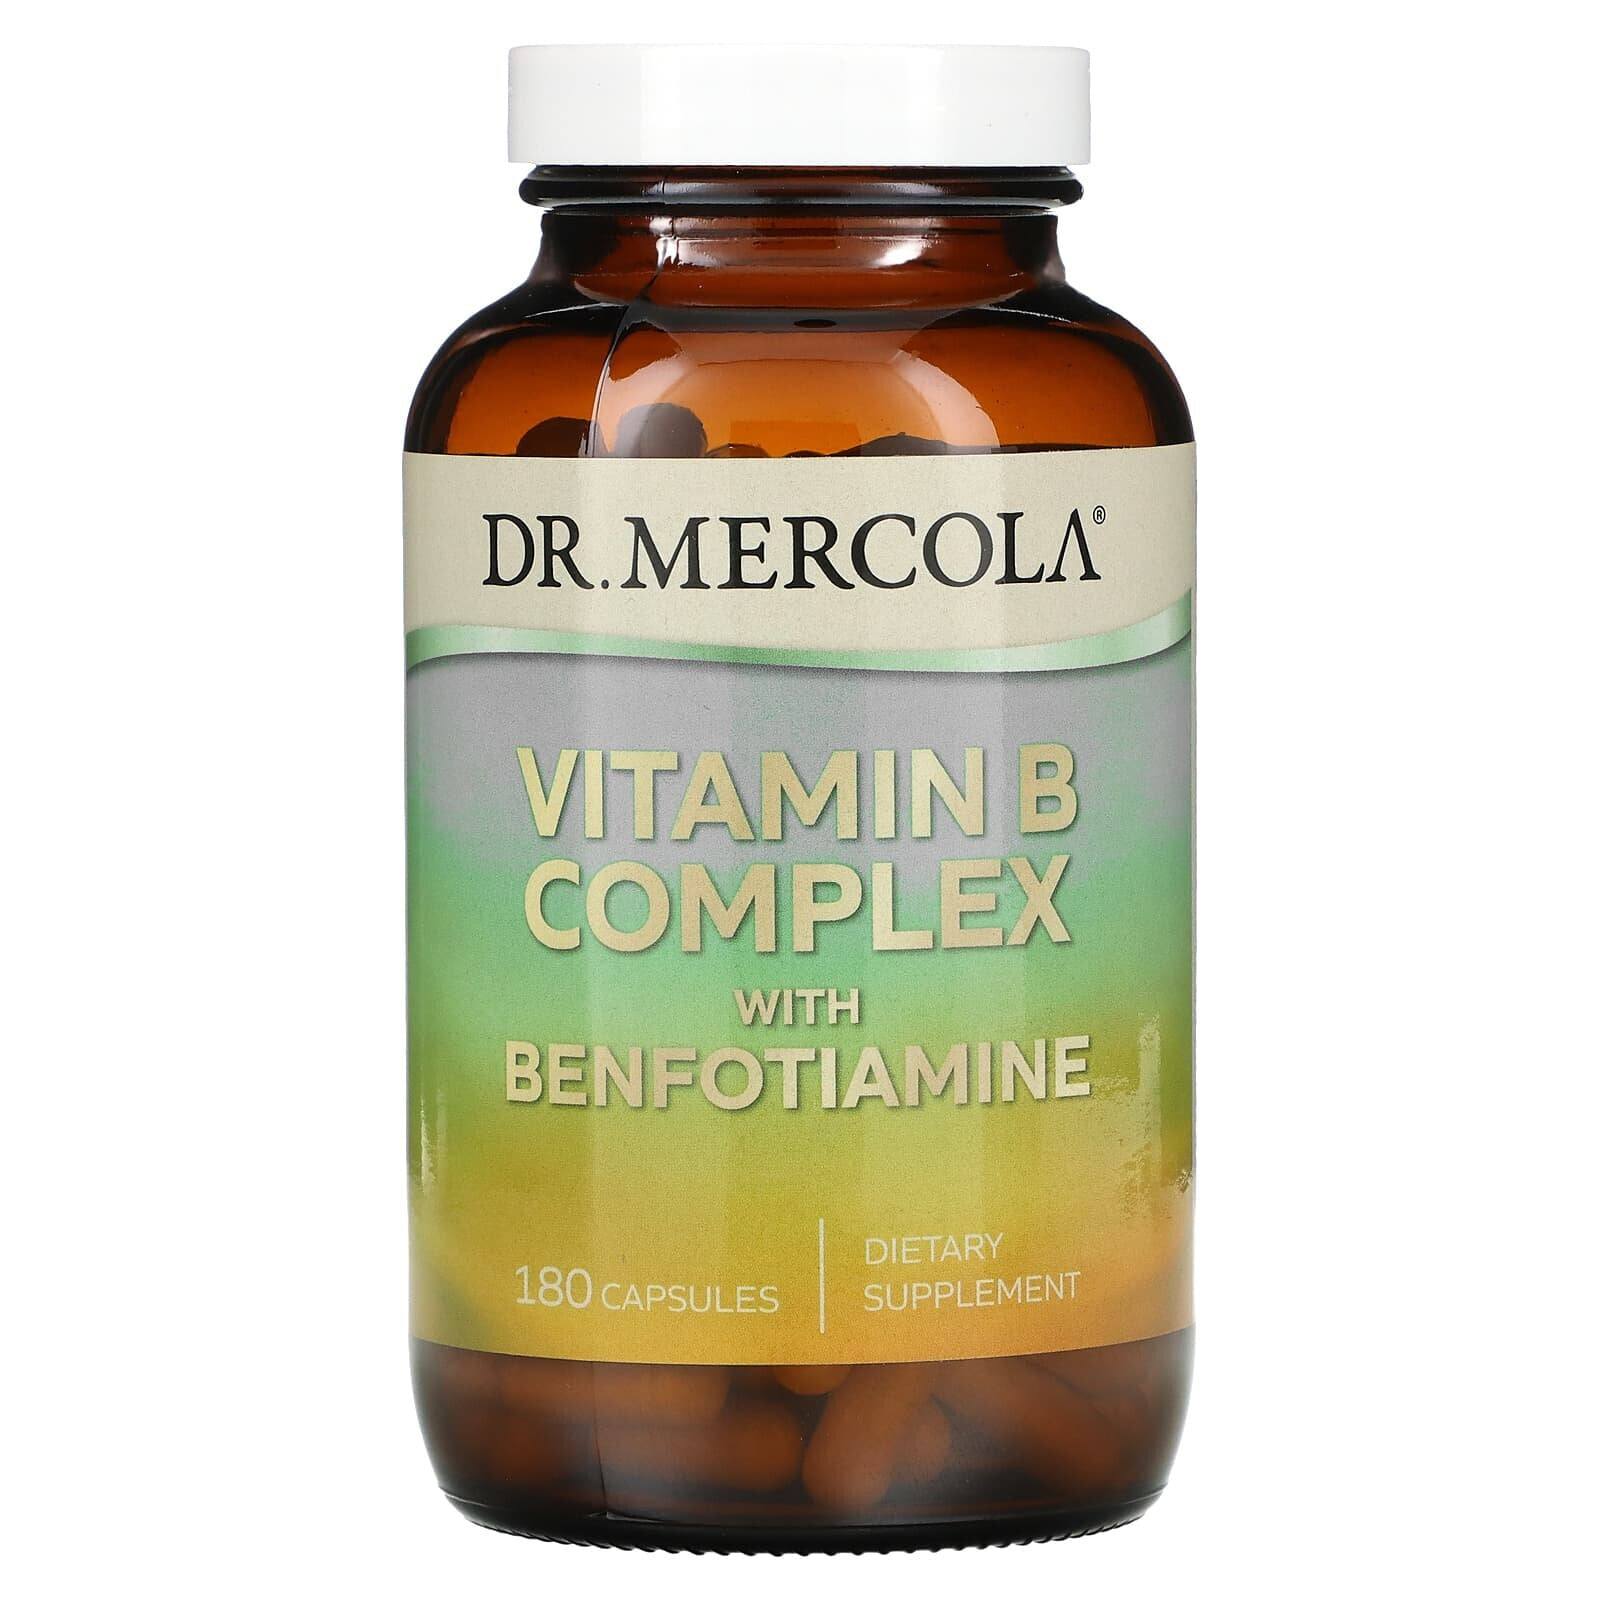 Vitamin B Complex with Benfotiamine, 180 Capsules